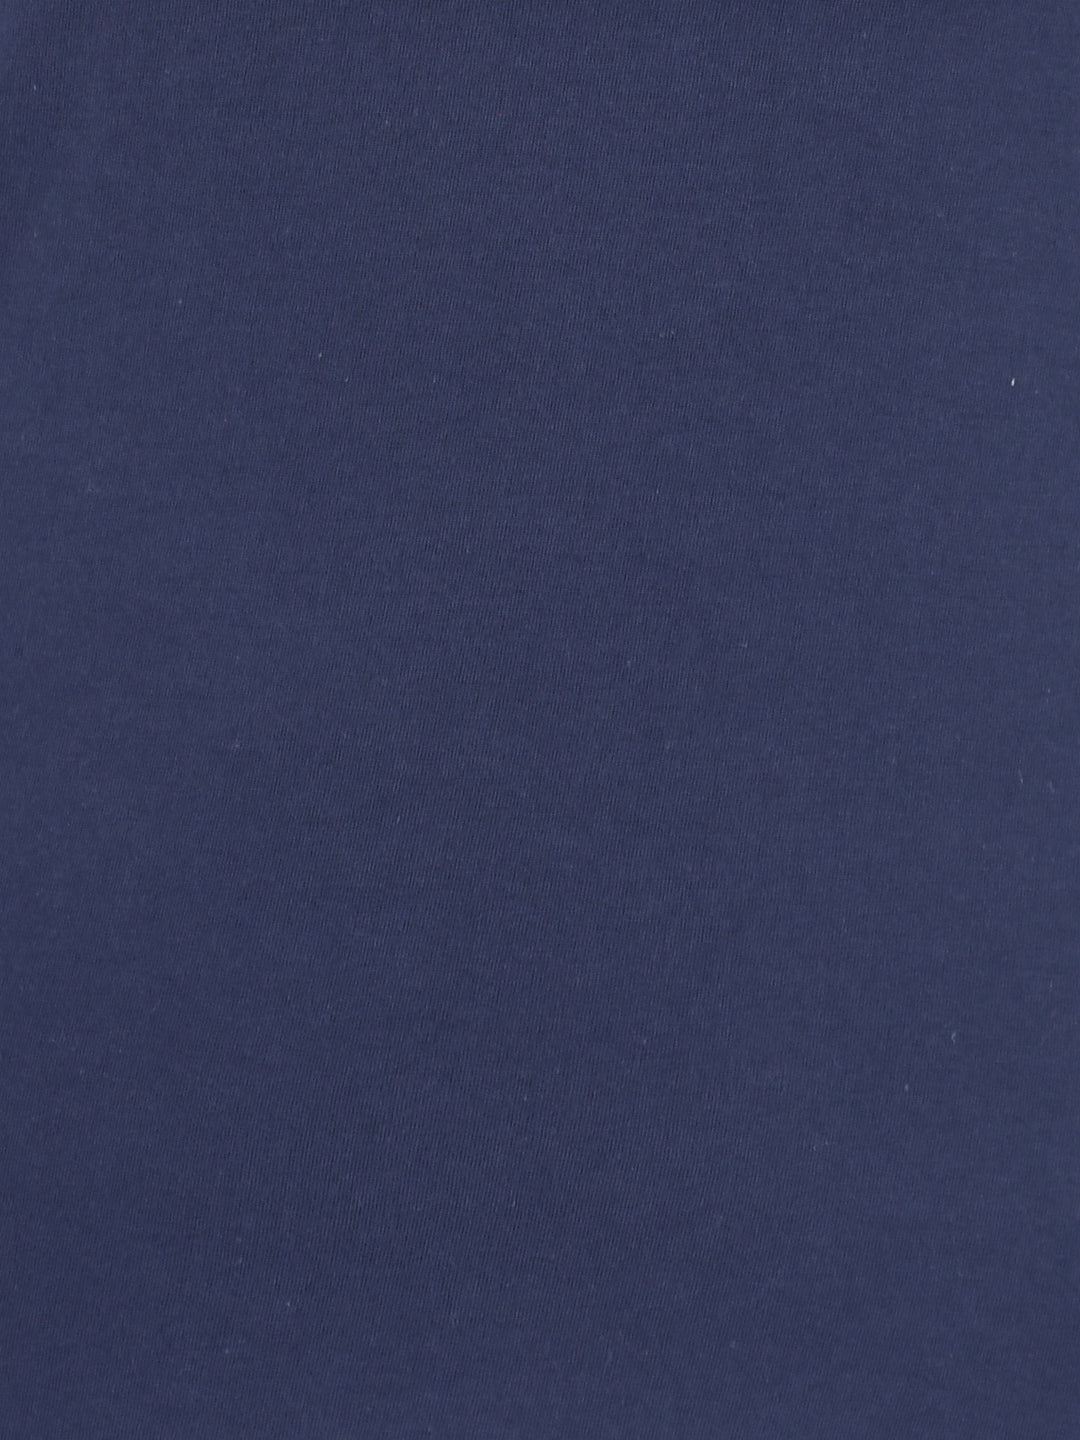 Klamotten Women's Blue Grey Graphic Printed Top and Allover Printed Pyjama Set N108N